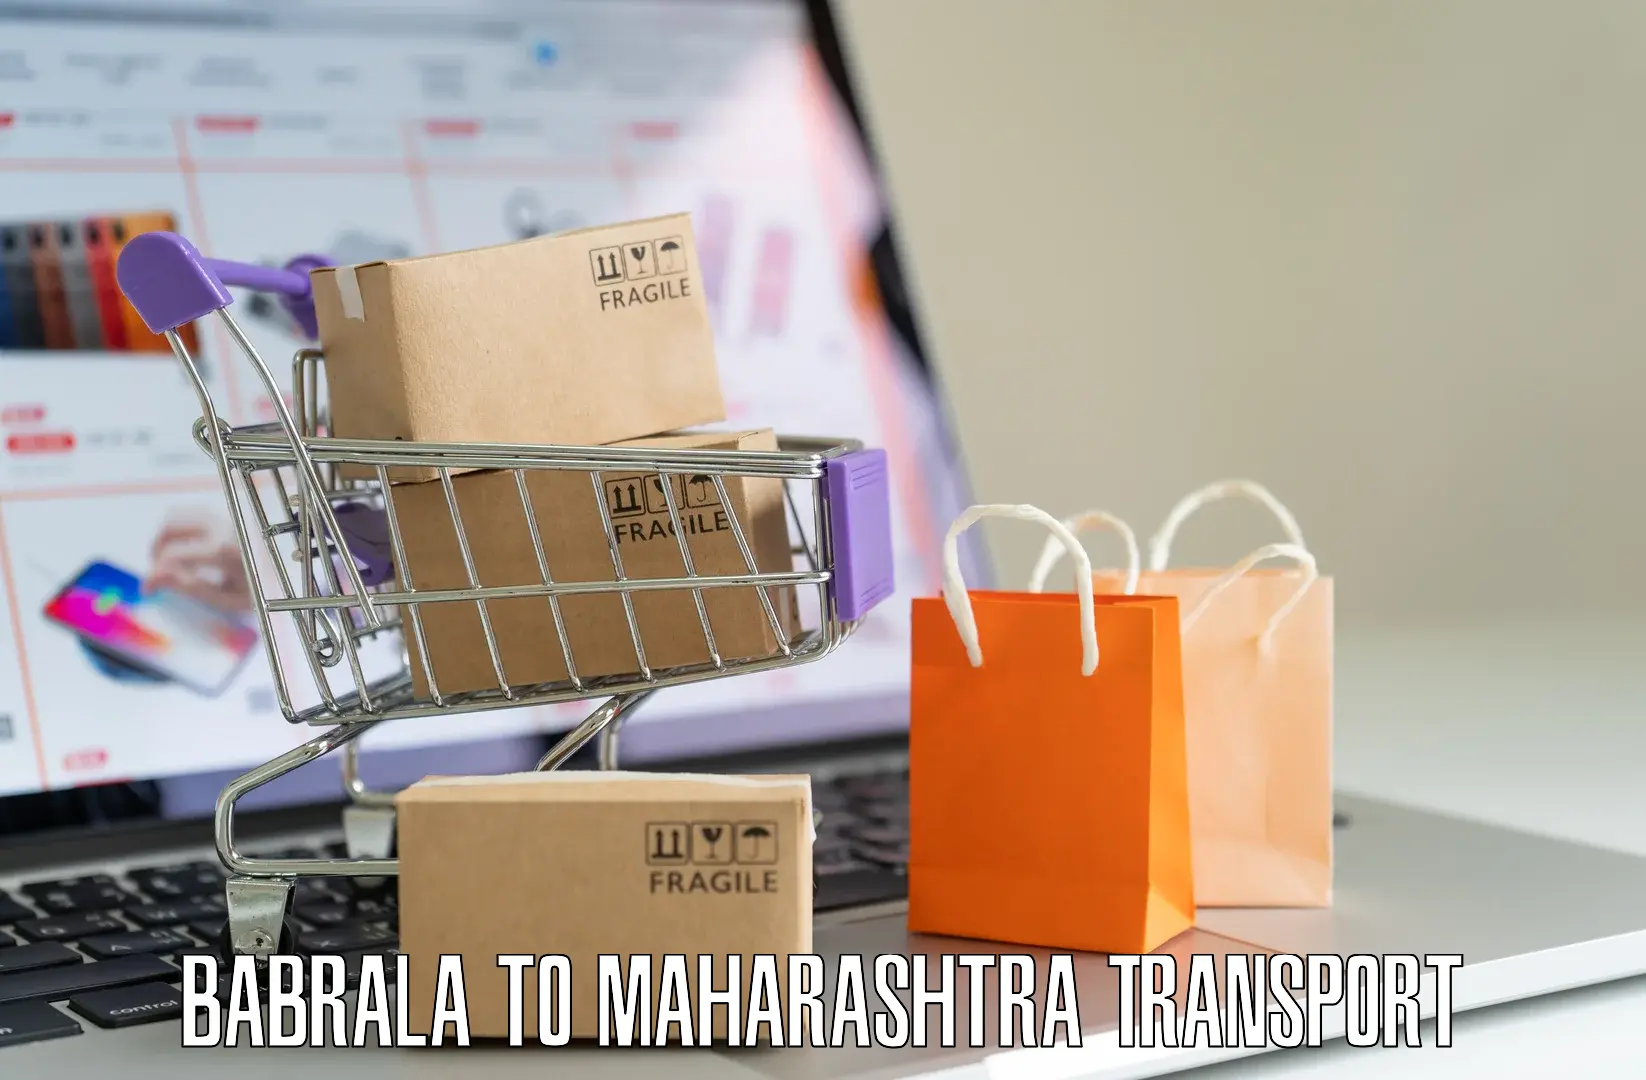 Bike transport service Babrala to Maharashtra